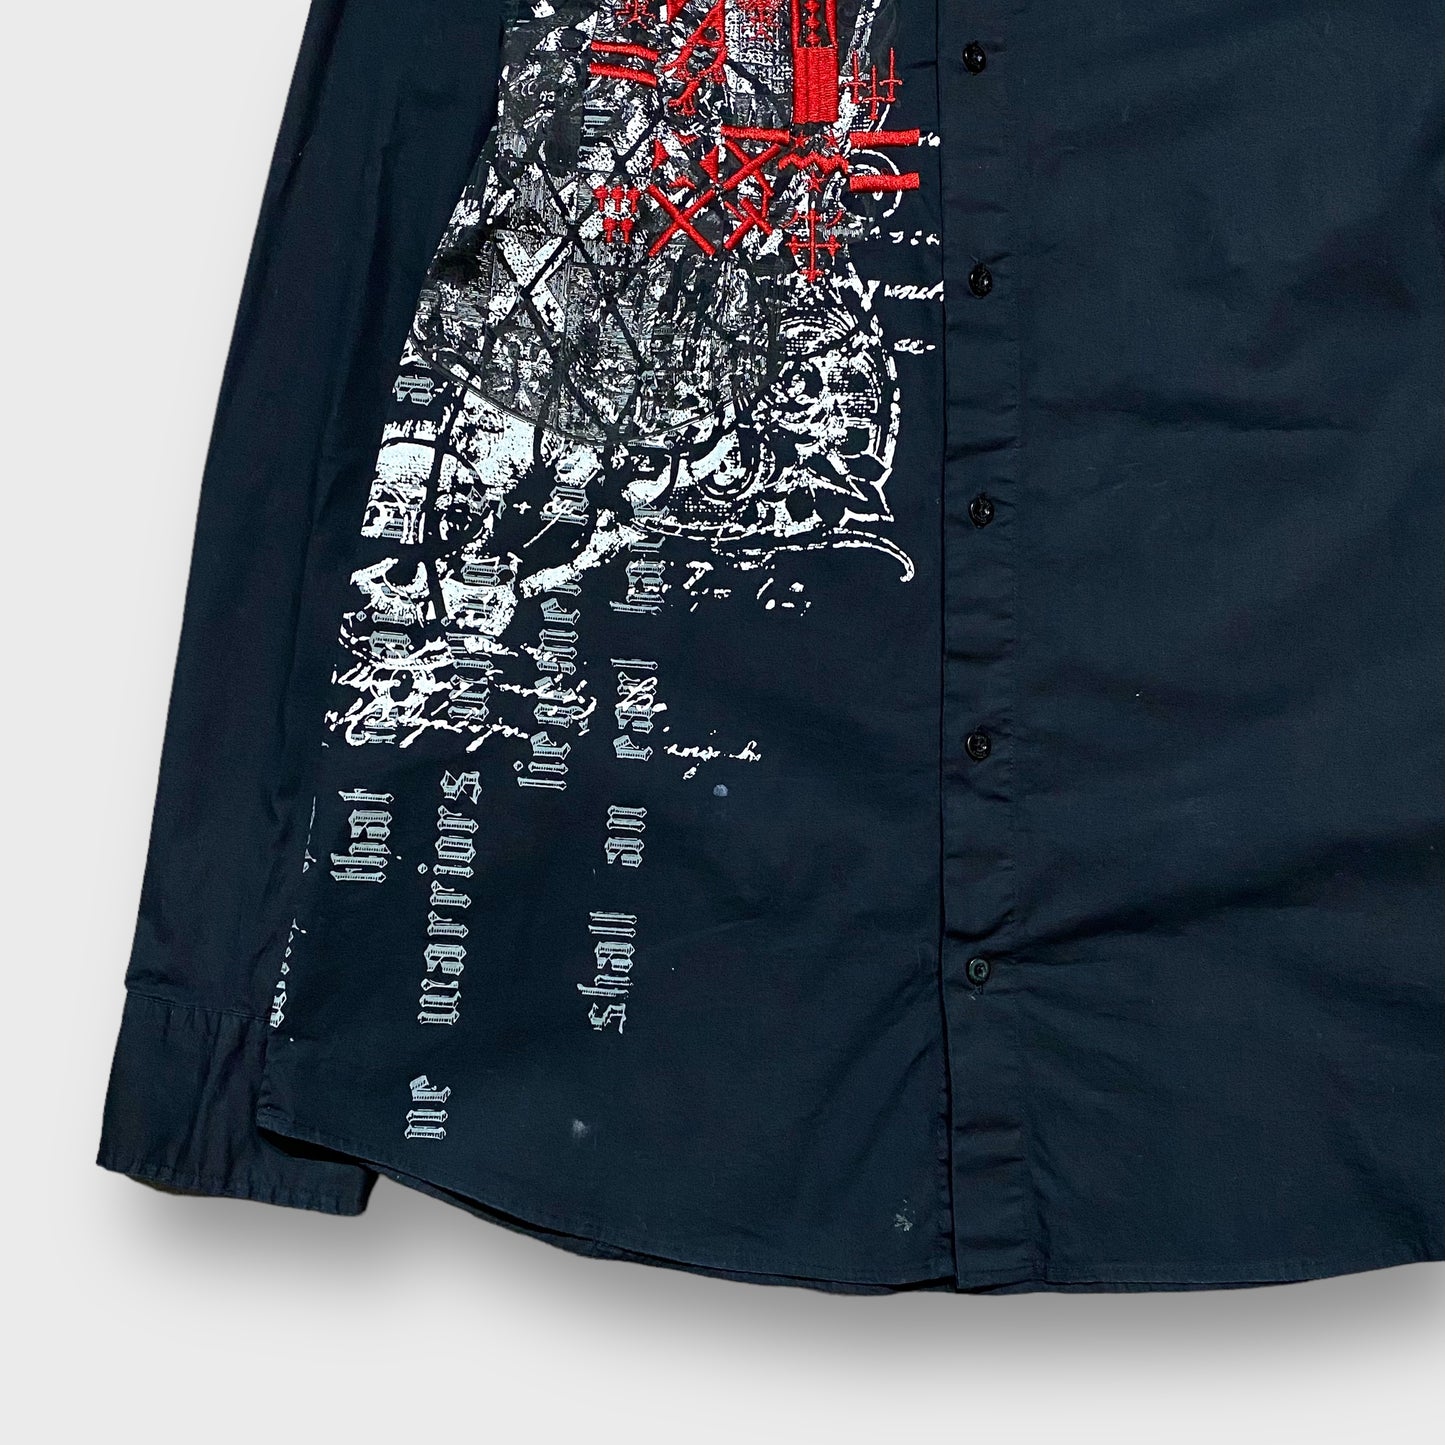 "Roar" Embroidery y2k design shirt